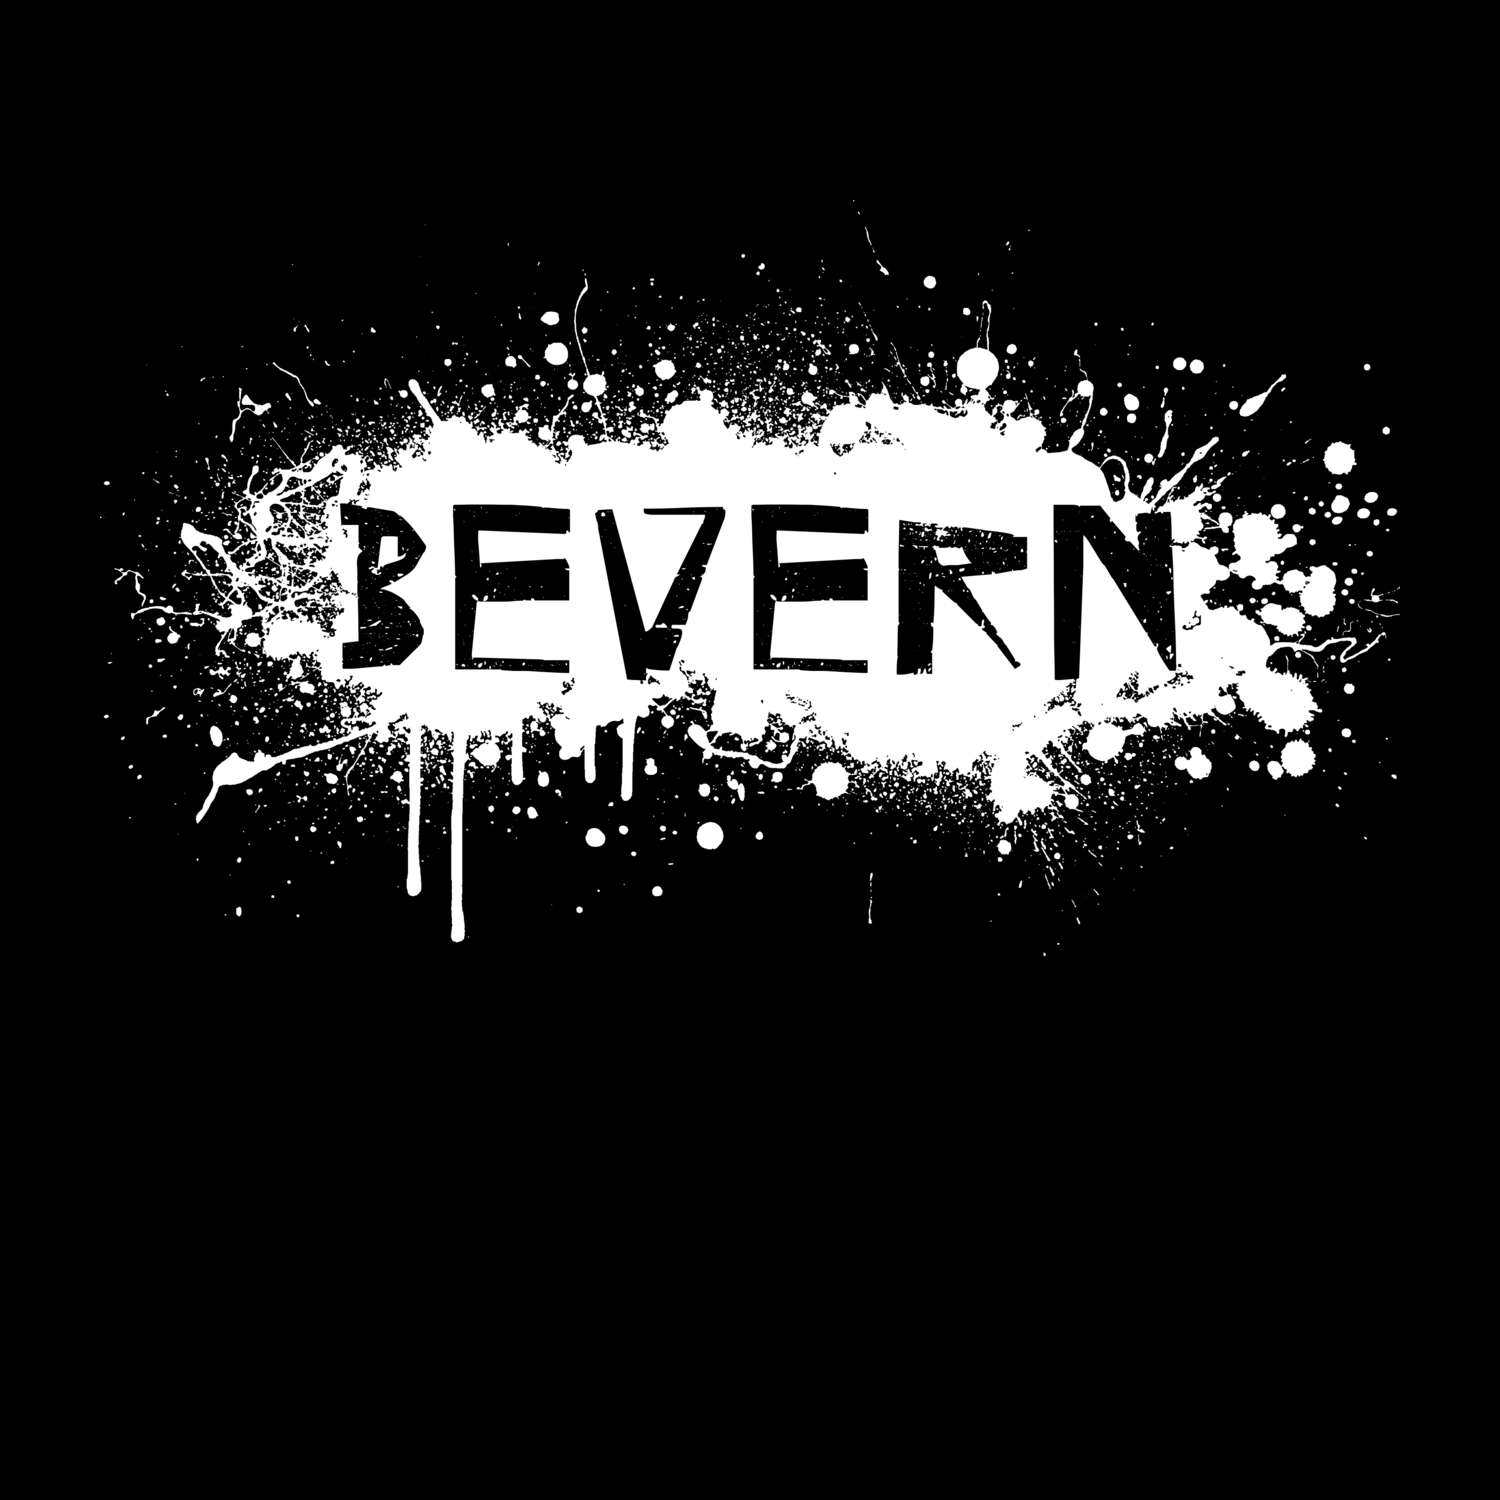 Bevern T-Shirt »Paint Splash Punk«